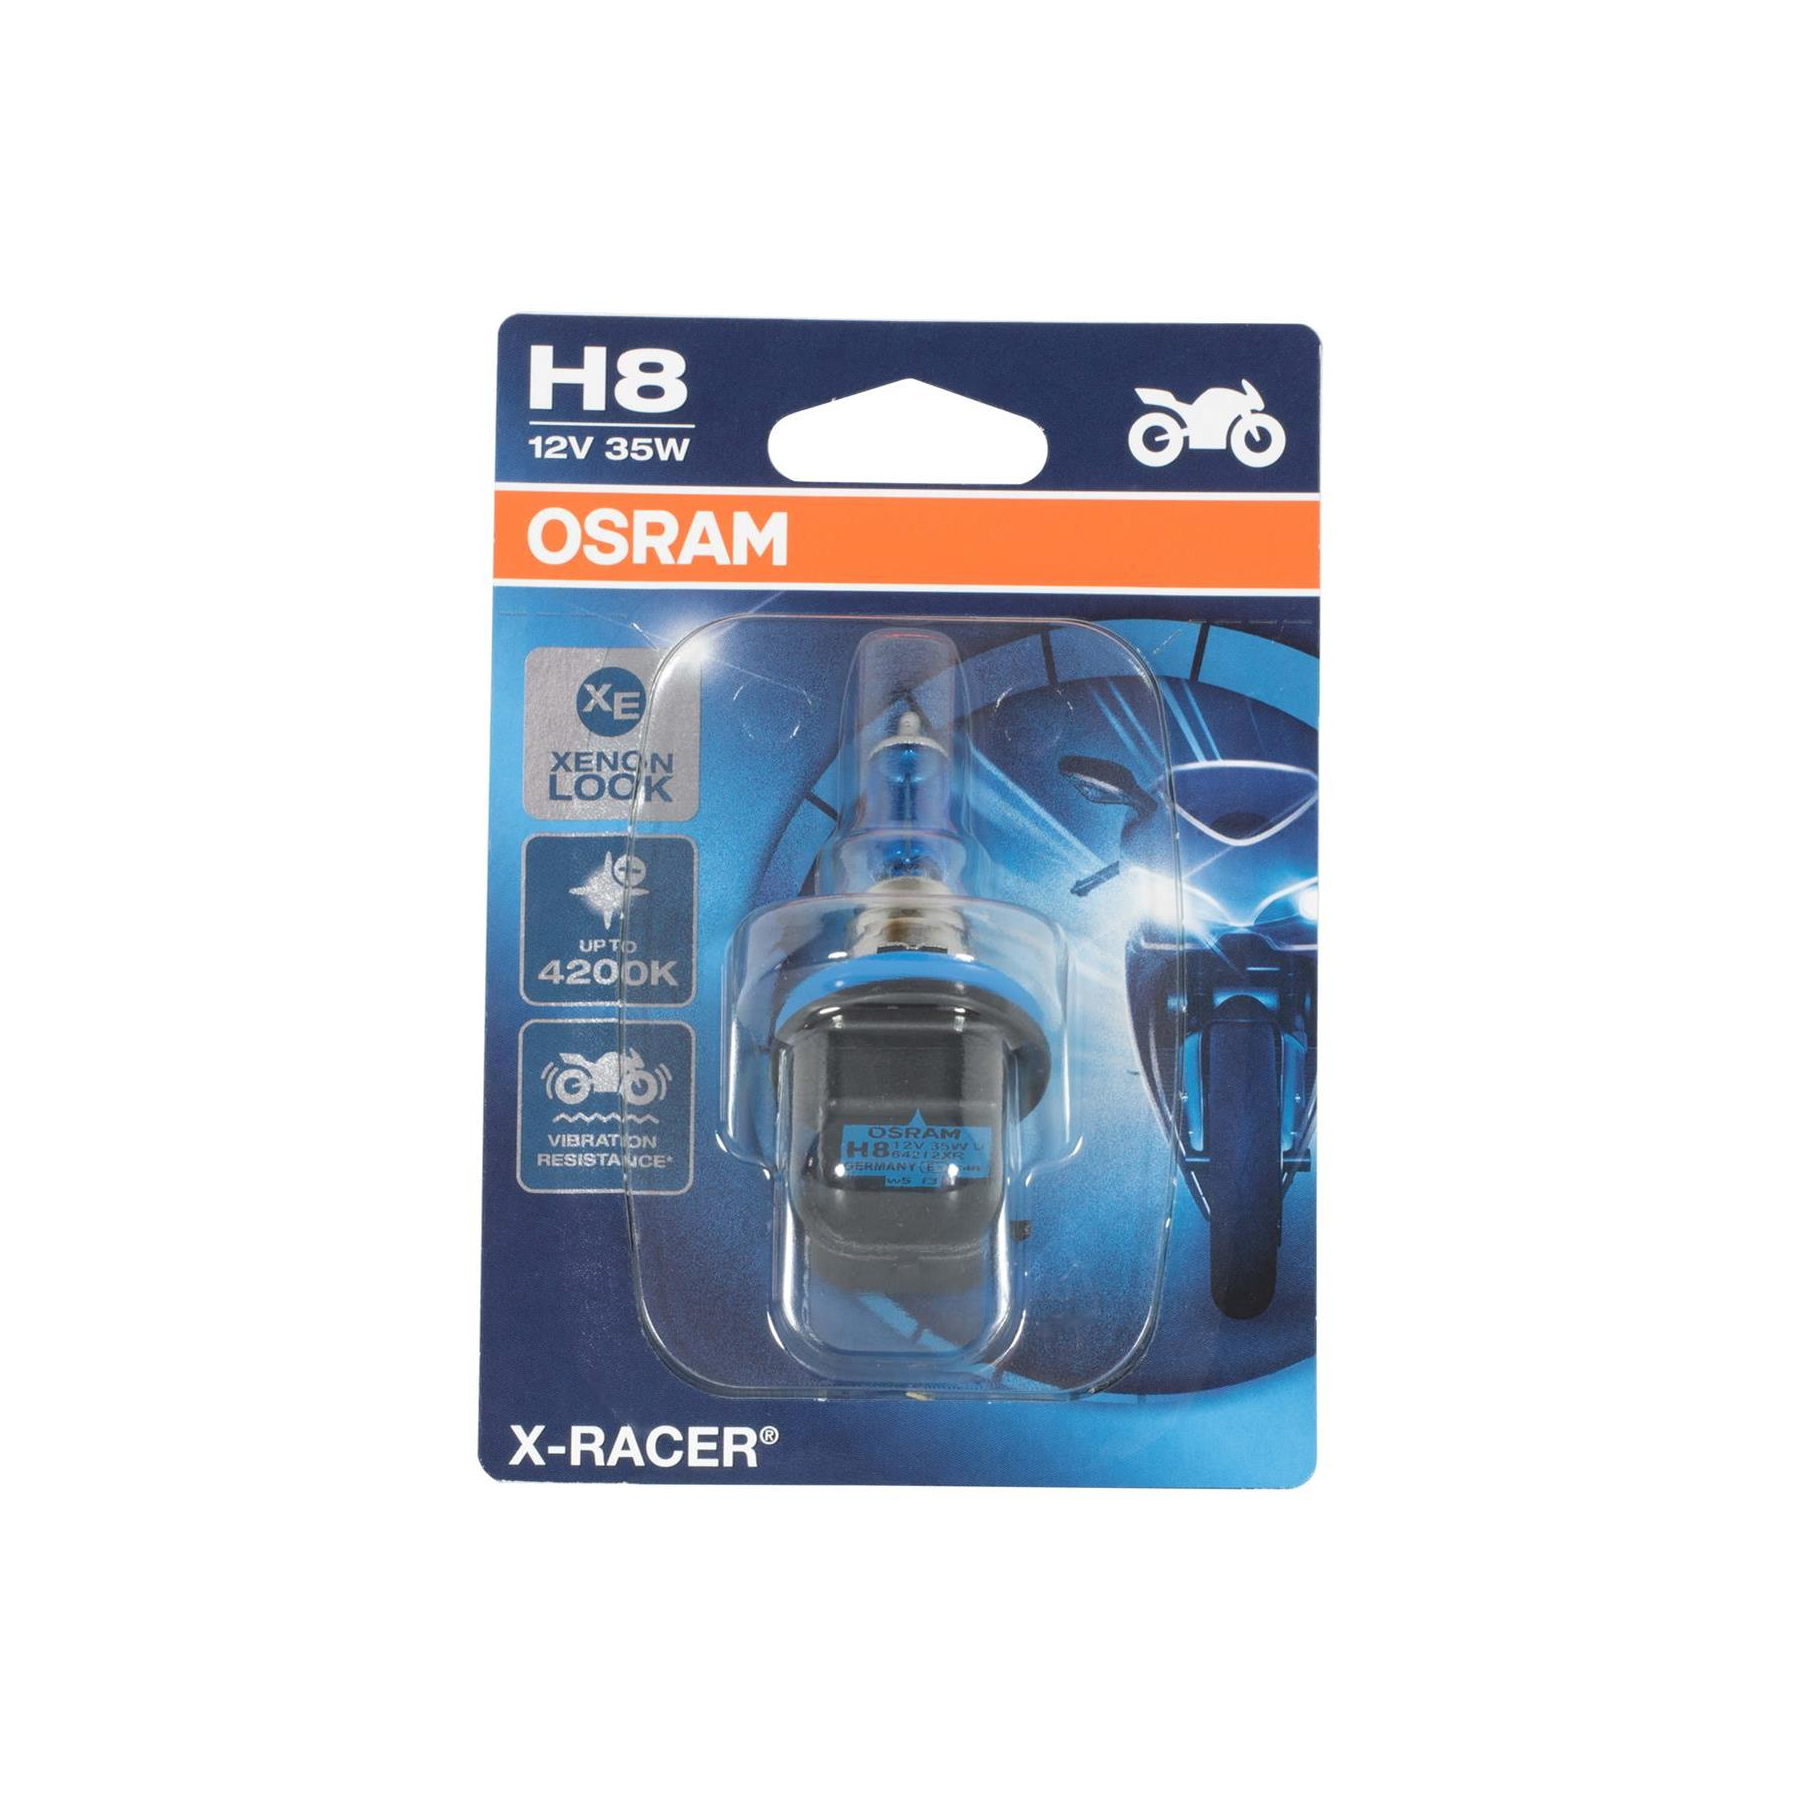 https://electronicx.de/media/image/product/3146/lg/osram-64212xr-01b-x-racer-h8-halogen-motorrad-scheinwerferlampe-einzelblister-1-stueck.jpg